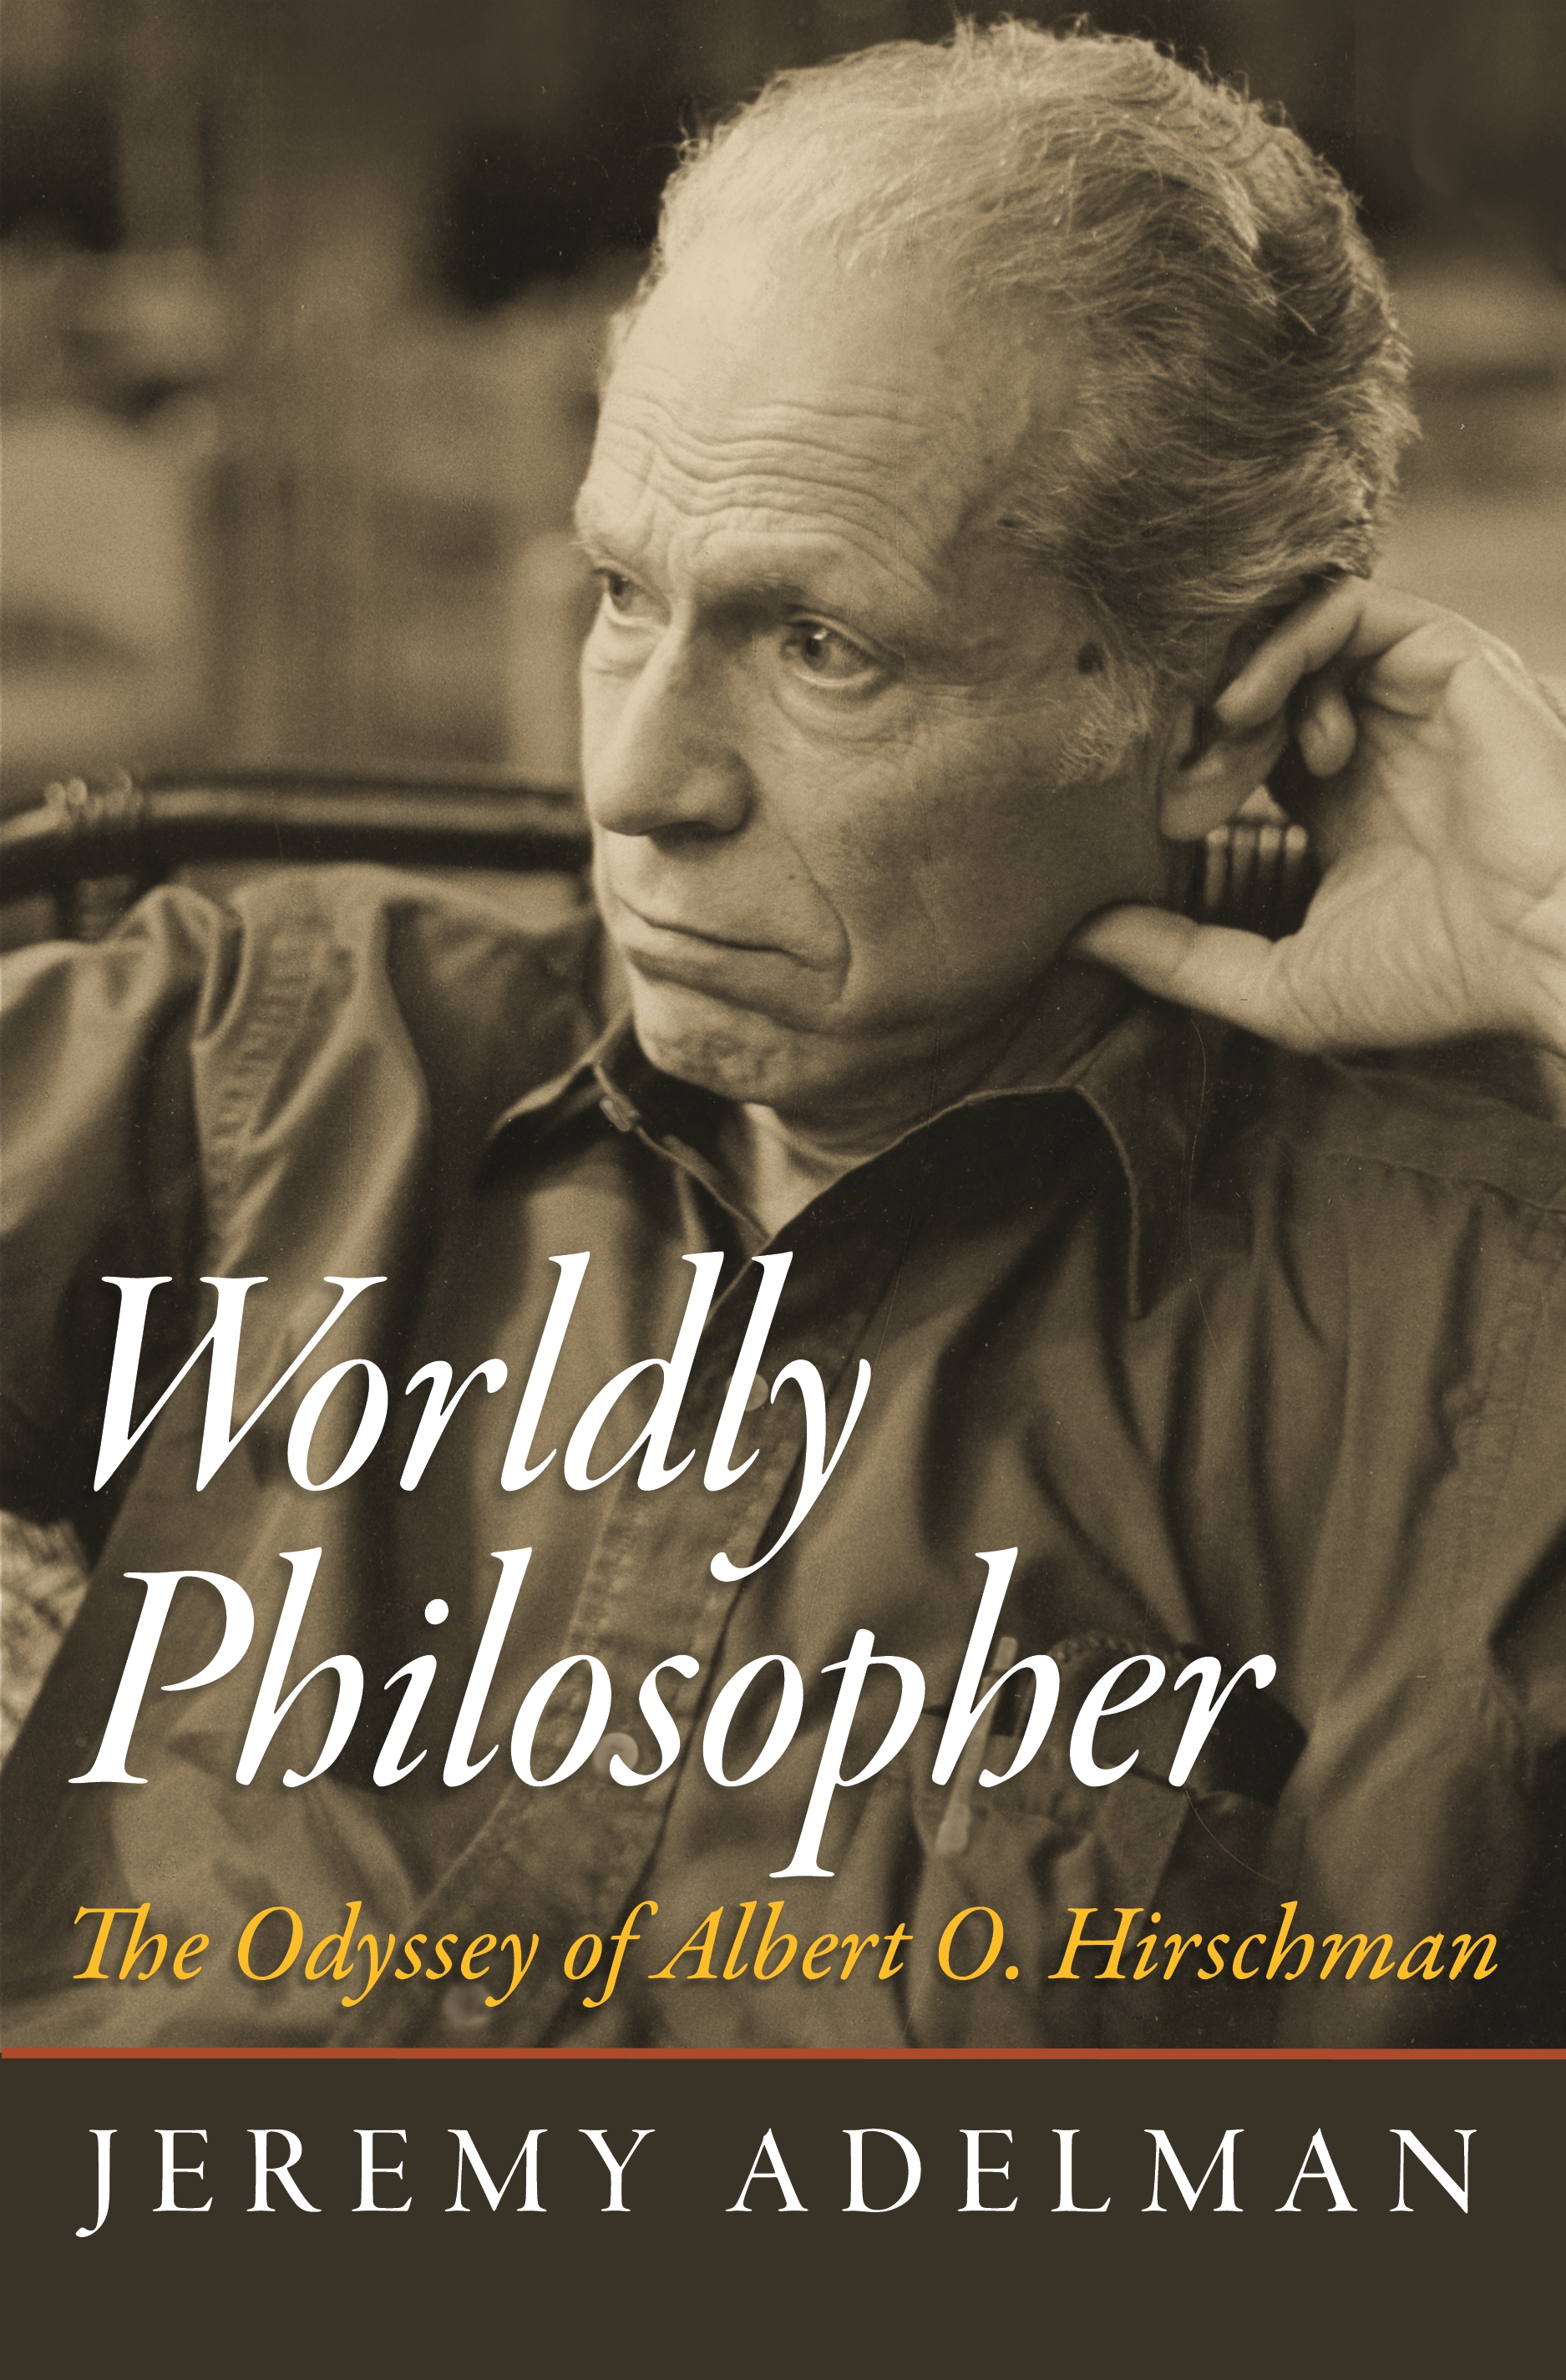 Press　Princeton　Worldly　Philosopher　University